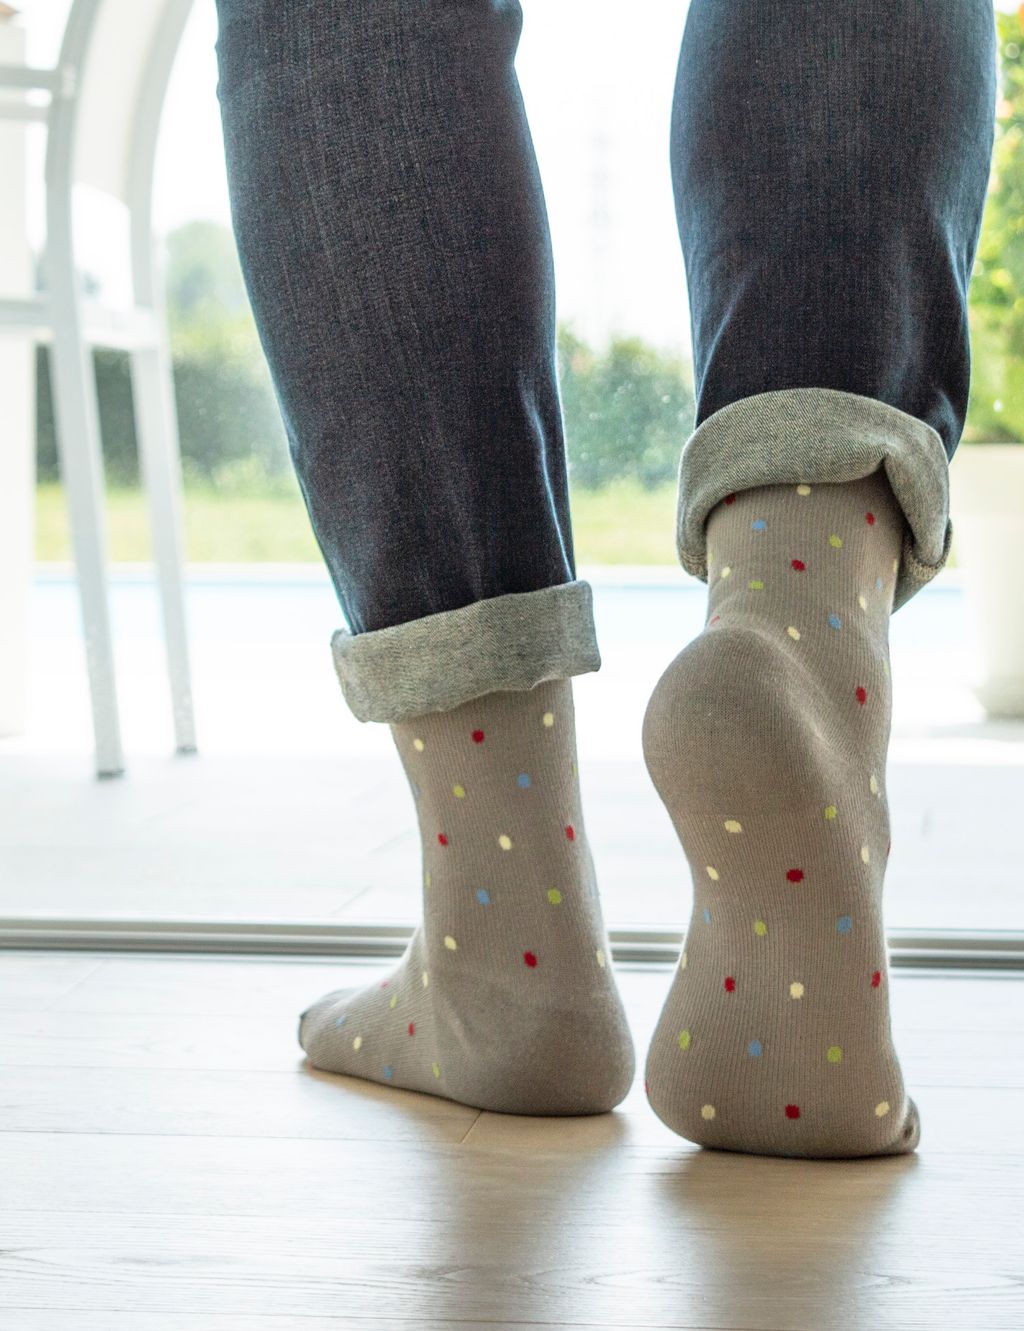 Relaxsan Fancy Cotton Socks Гольфы с хлопком 1 класс компрессии унисекс, р. 4, арт. 820 Fancy (18-22 mm Hg), серый-горох, пара, 1 шт.